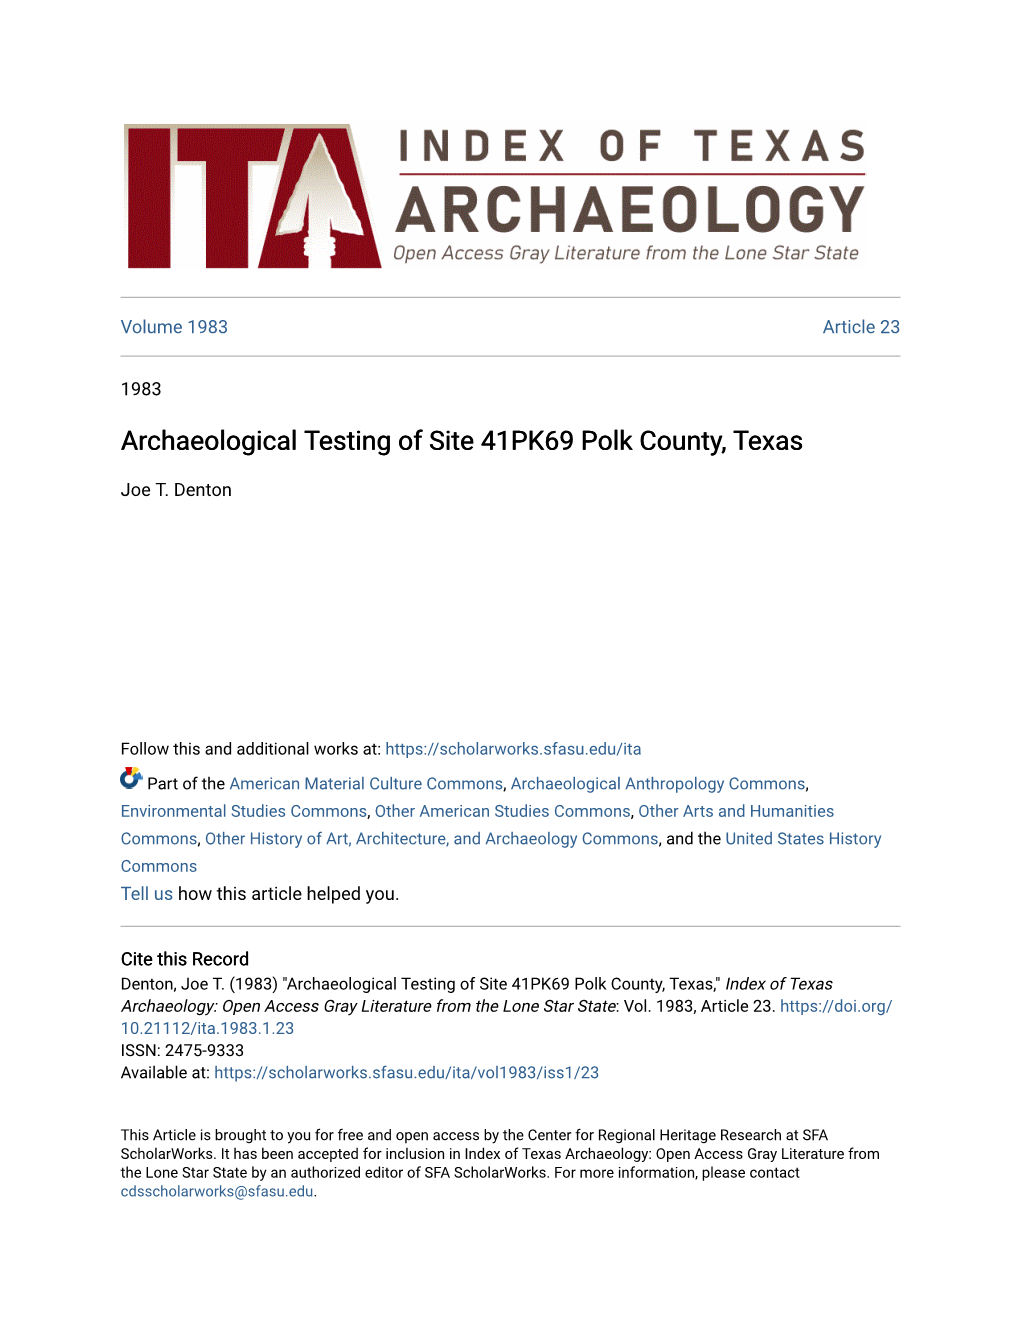 Archaeological Testing of Site 41PK69 Polk County, Texas